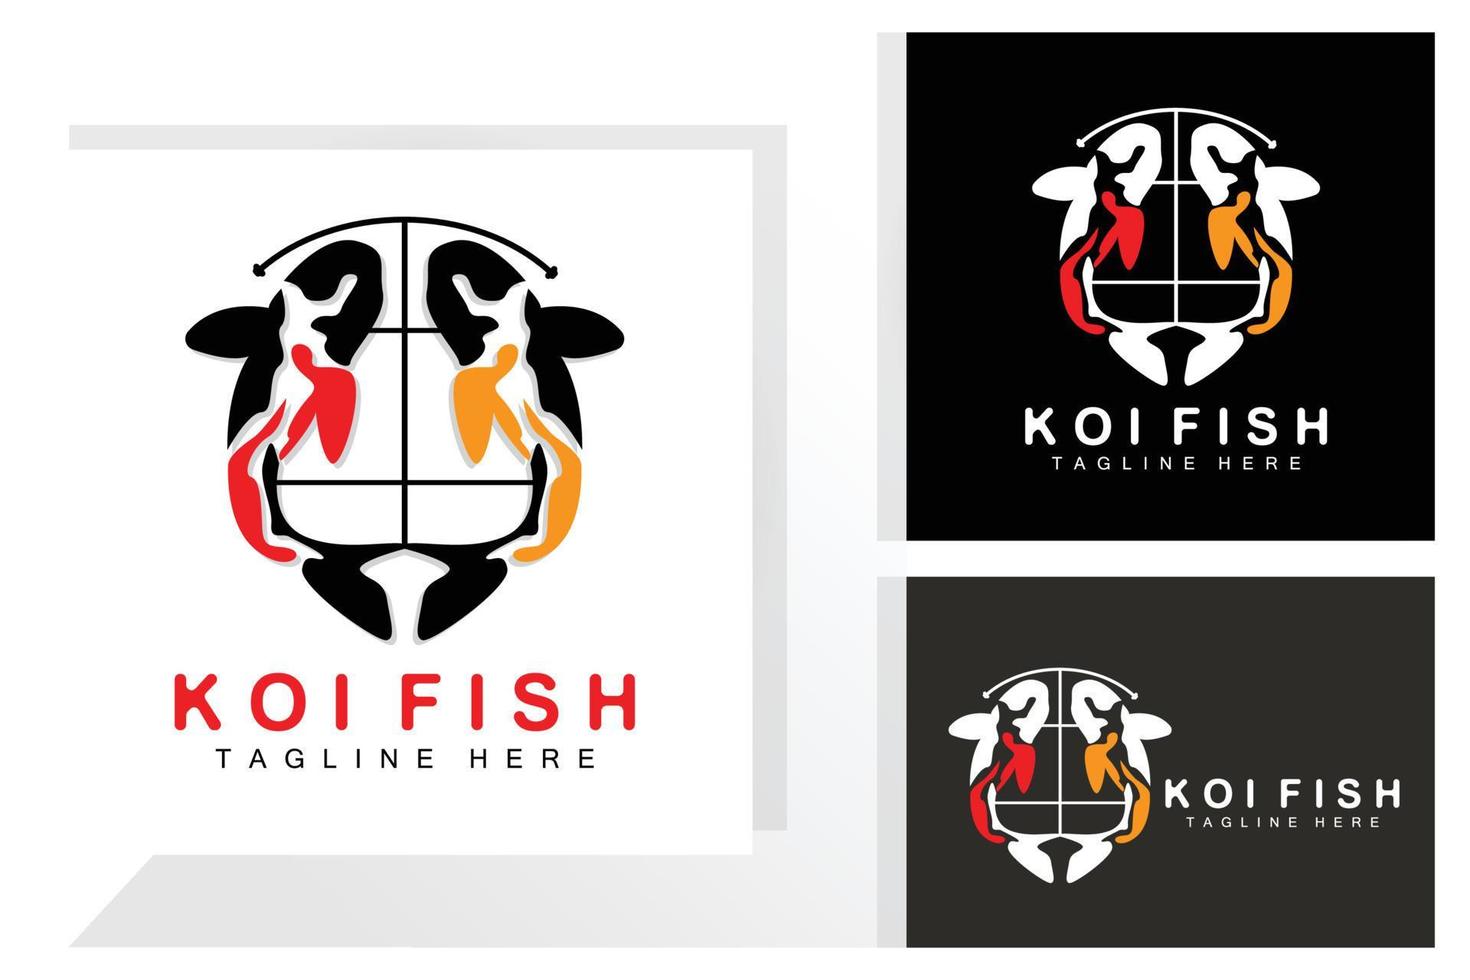 design de logotipo de peixe koi, vetor de peixe ornamental chinês de sorte e triunfo, ícone de peixe dourado da marca da empresa